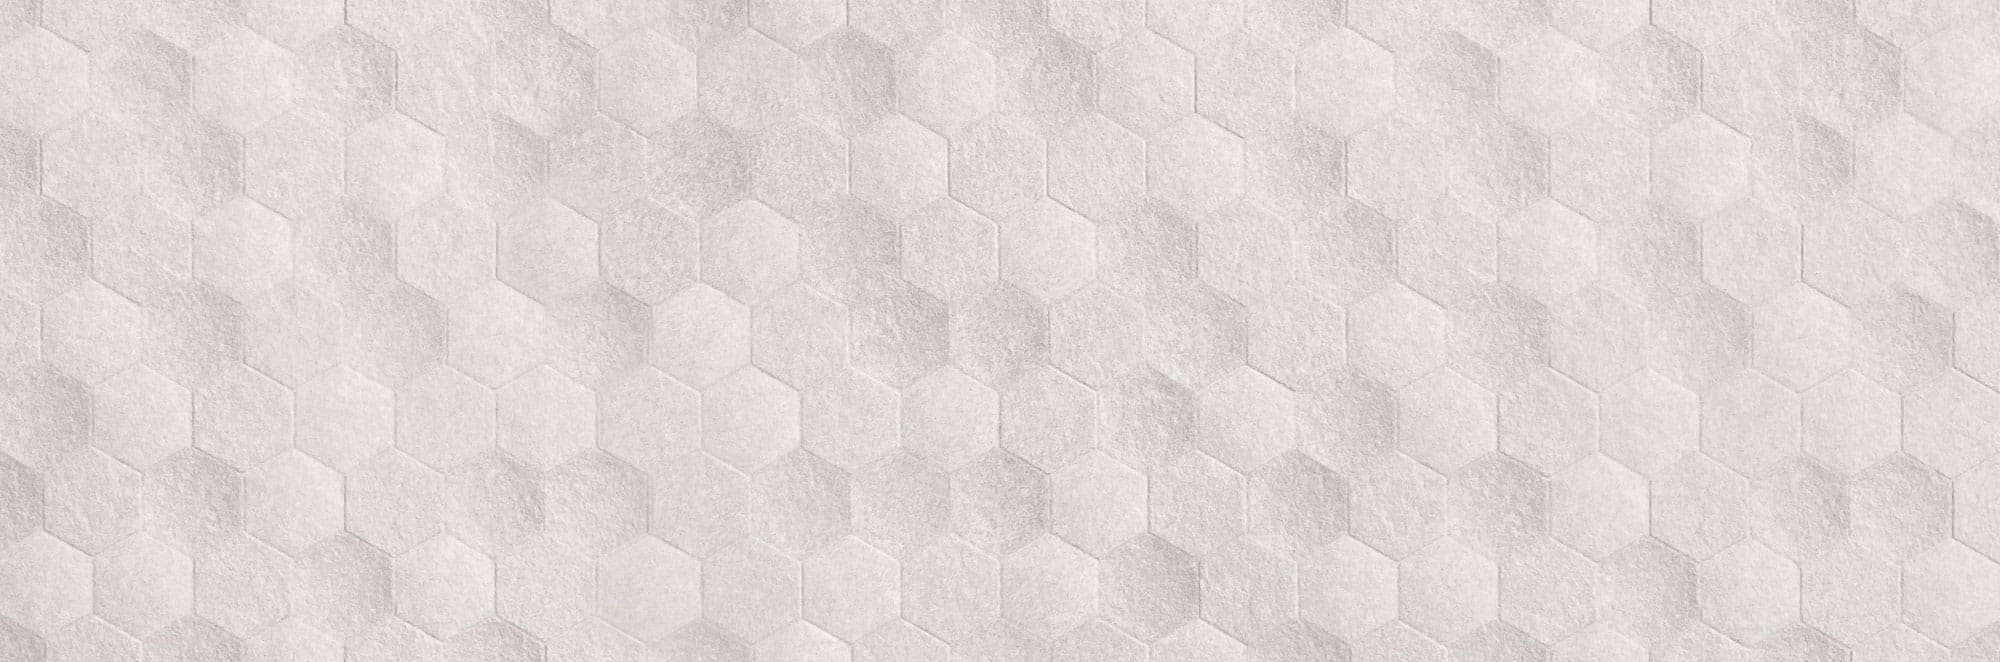 Band White Hexagon